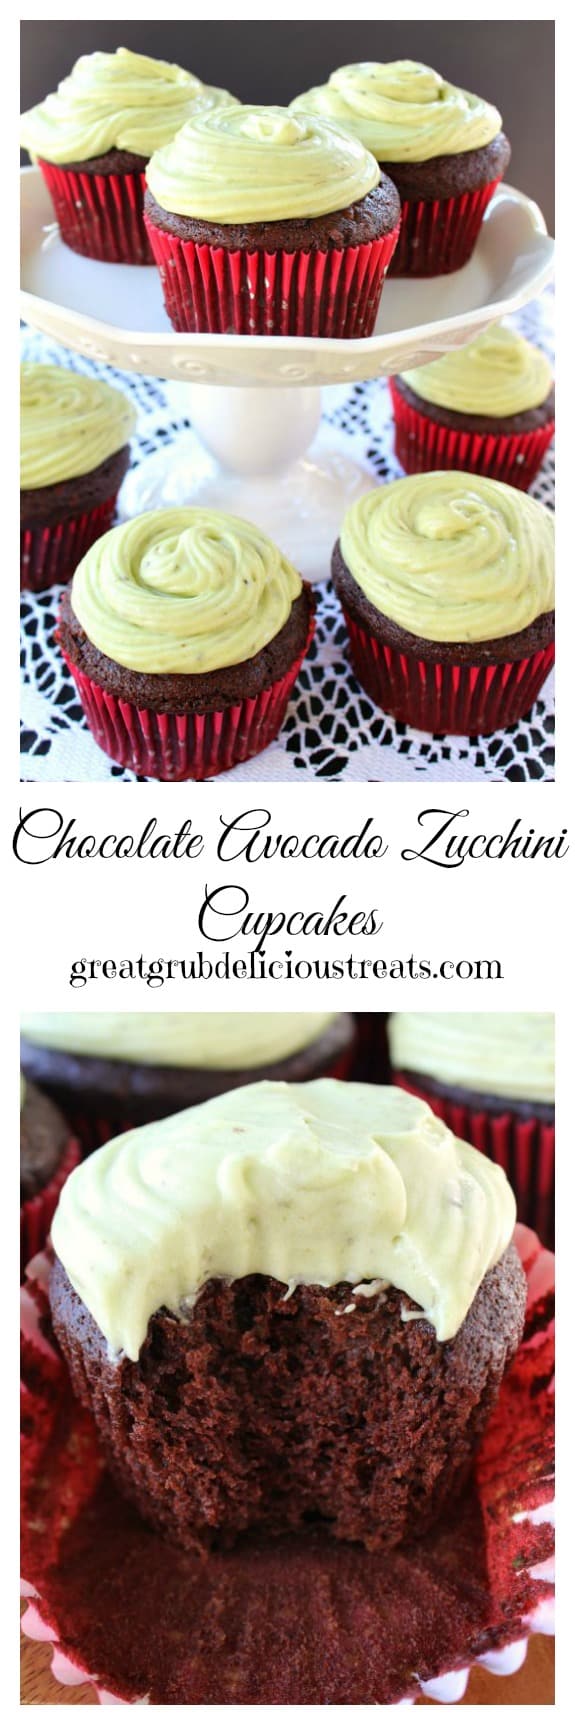 Chocolate Avocado Zucchini Cupcakes